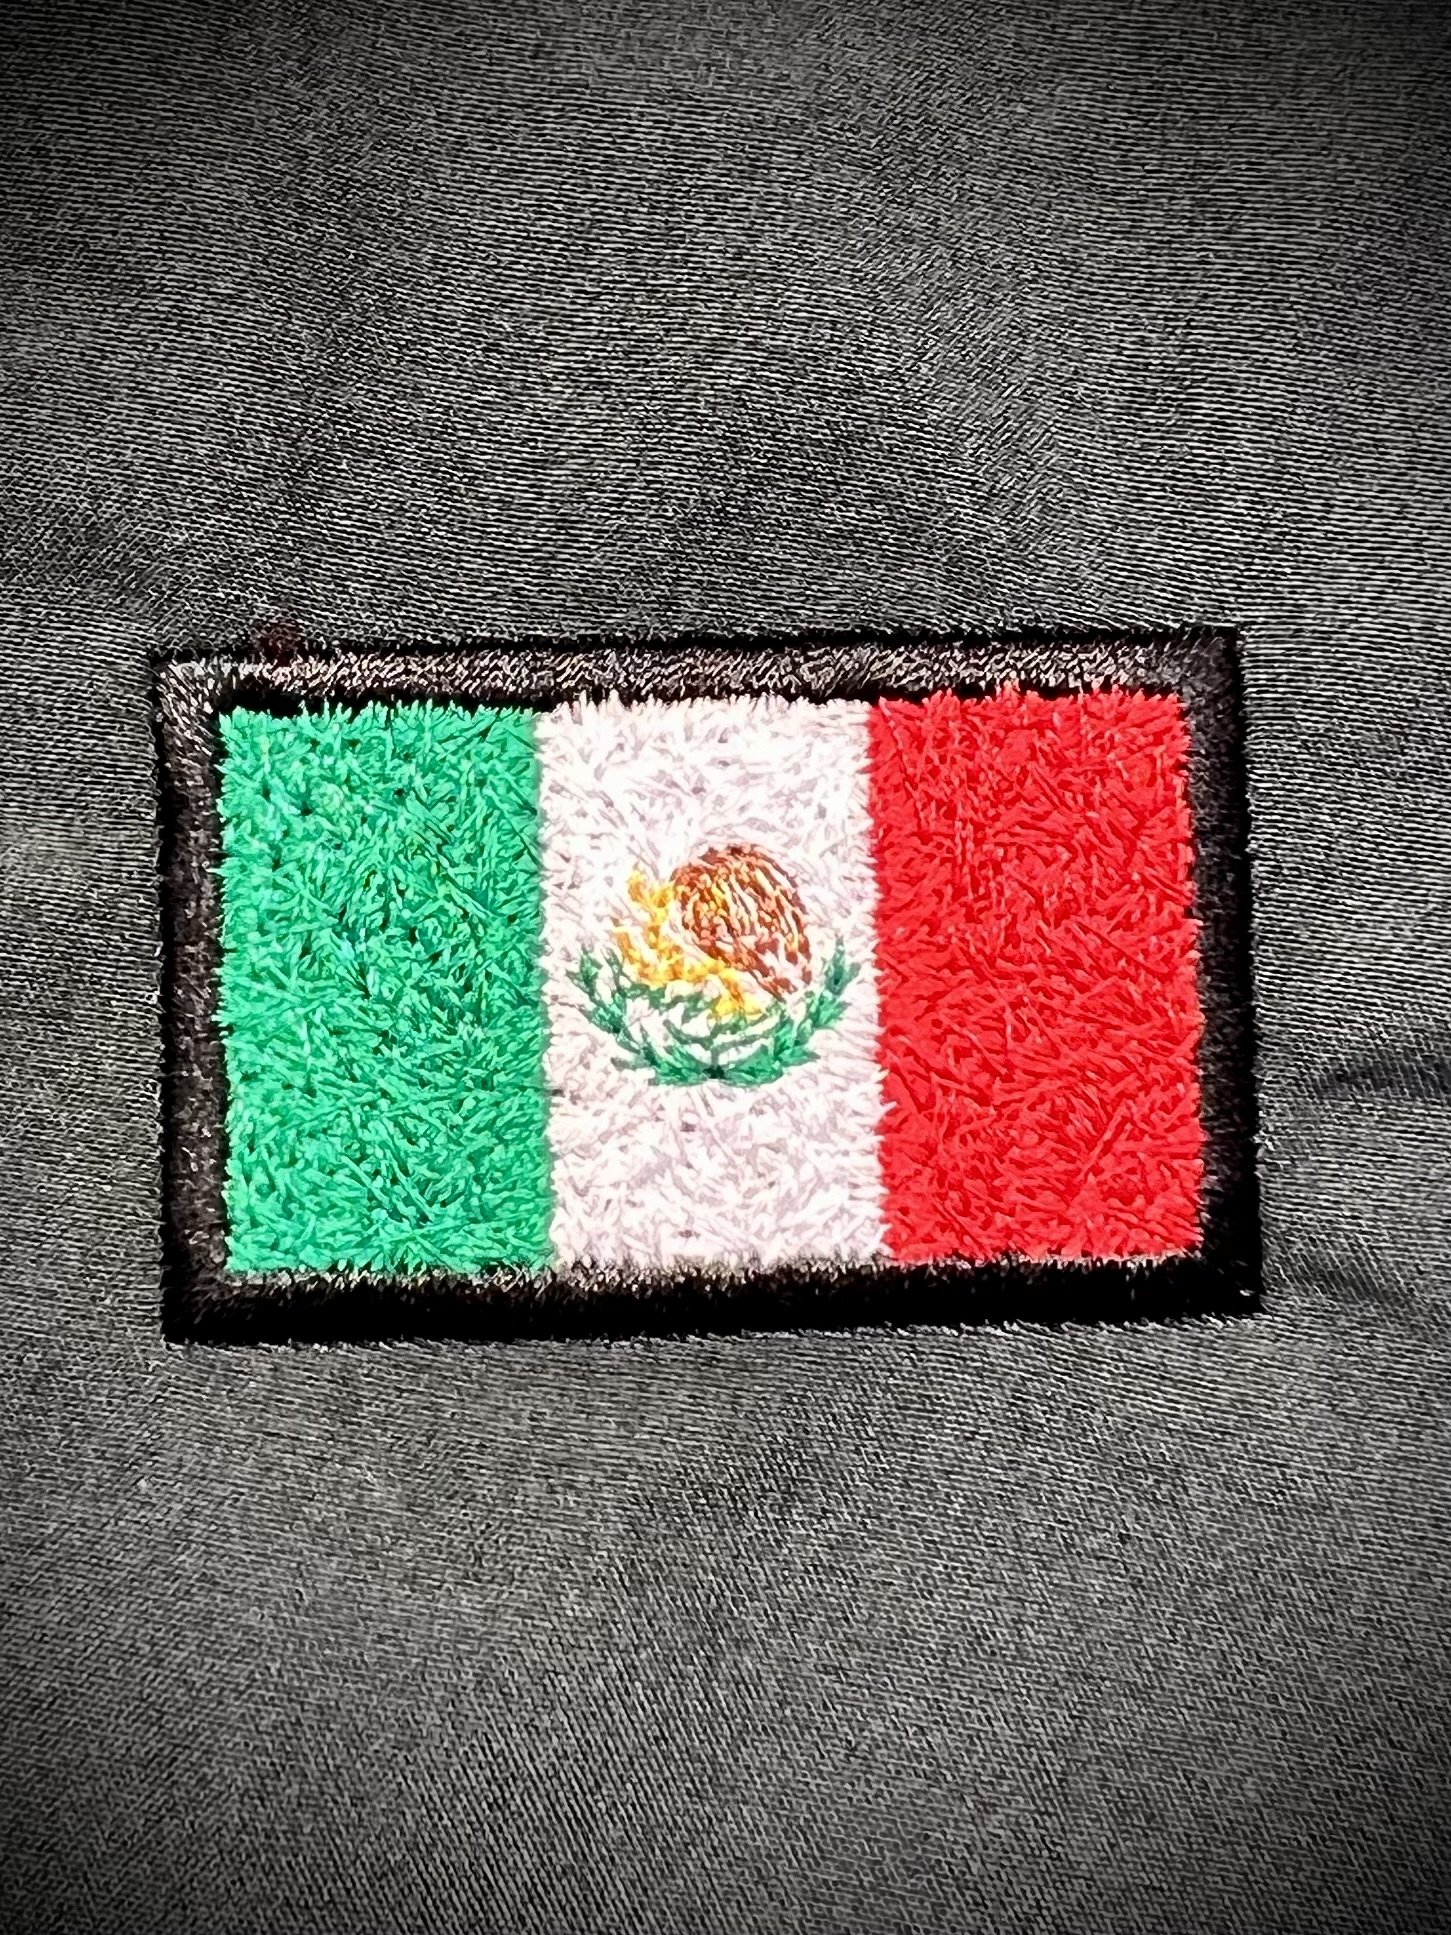 Small Mexico Flag — JA Digitizing Studios